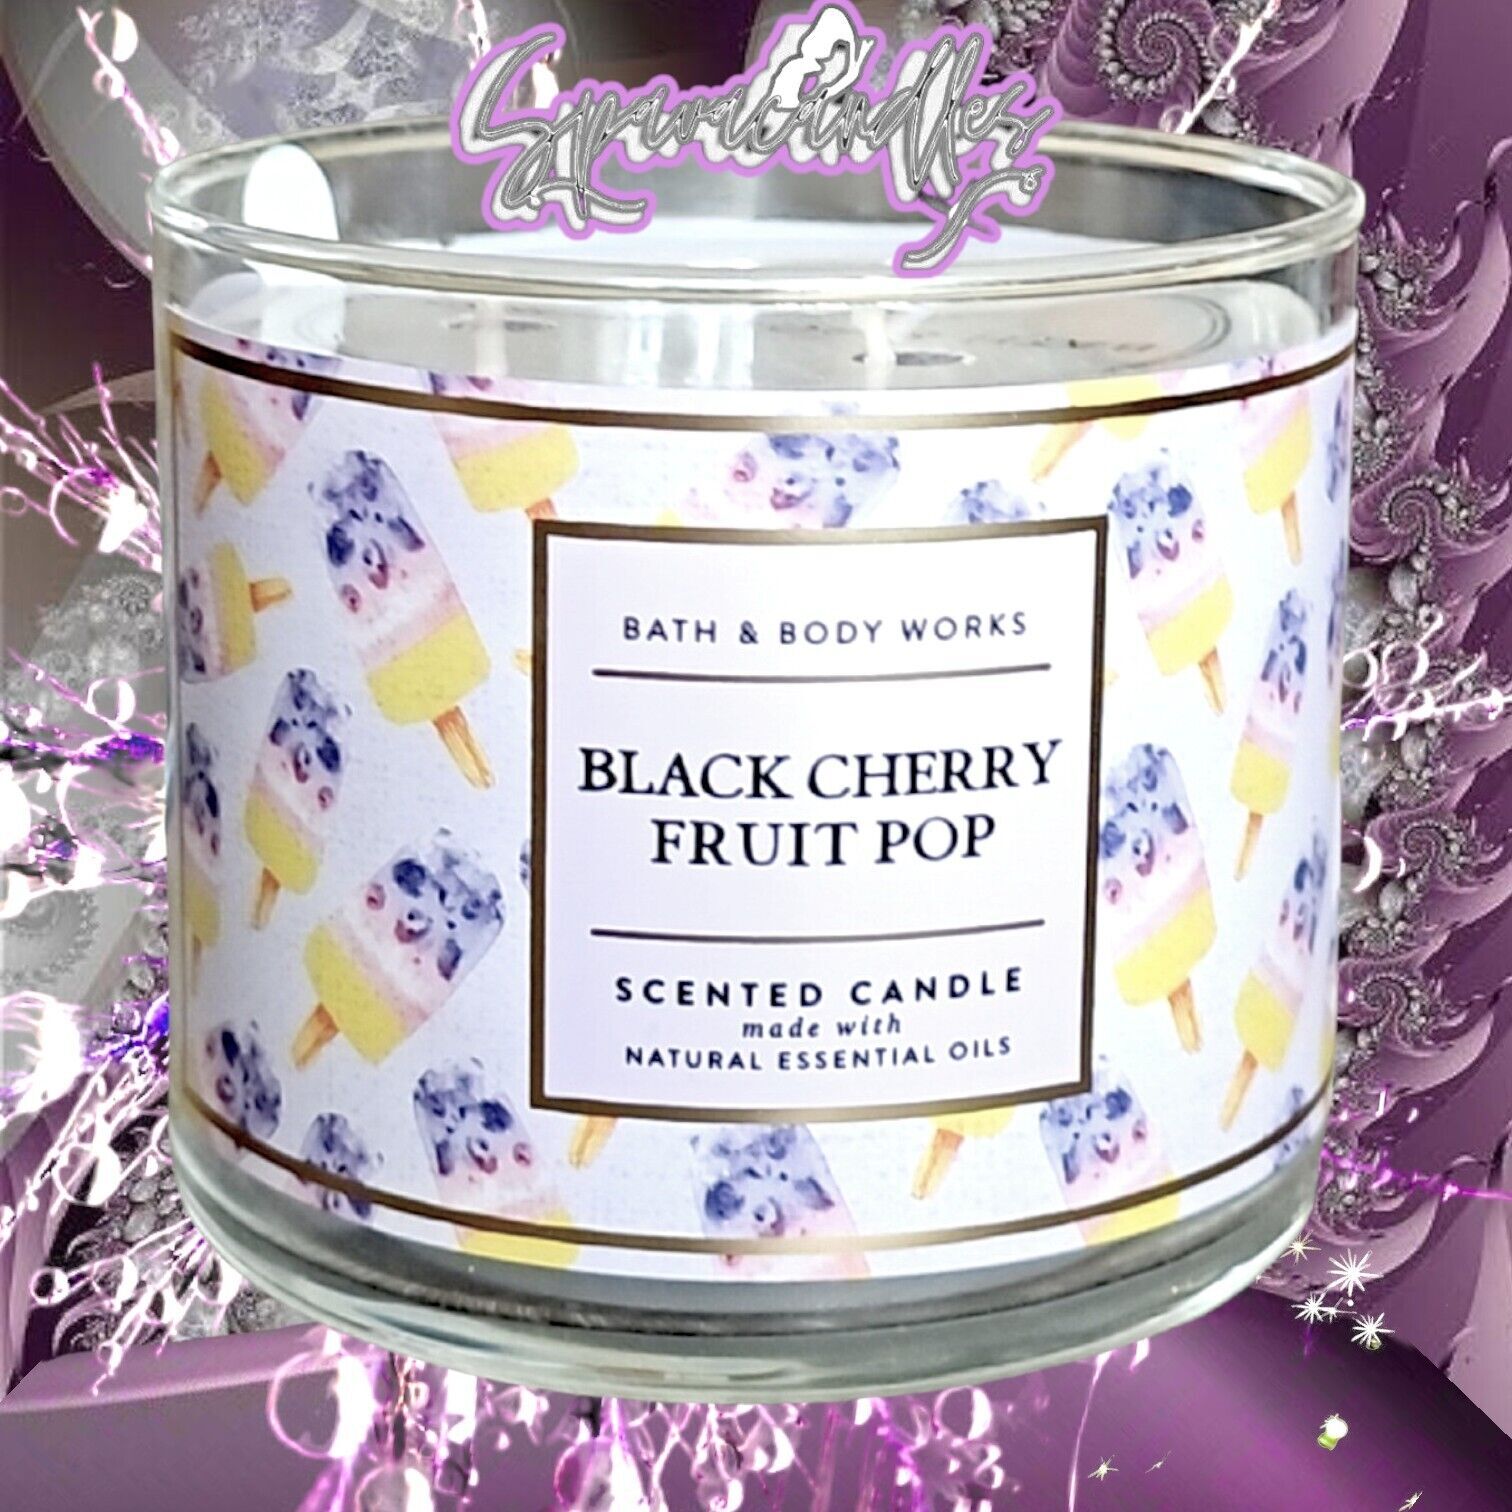 Black Cherry Fruit Pop 3 wick Candle - Essential Oils 14.5 oz